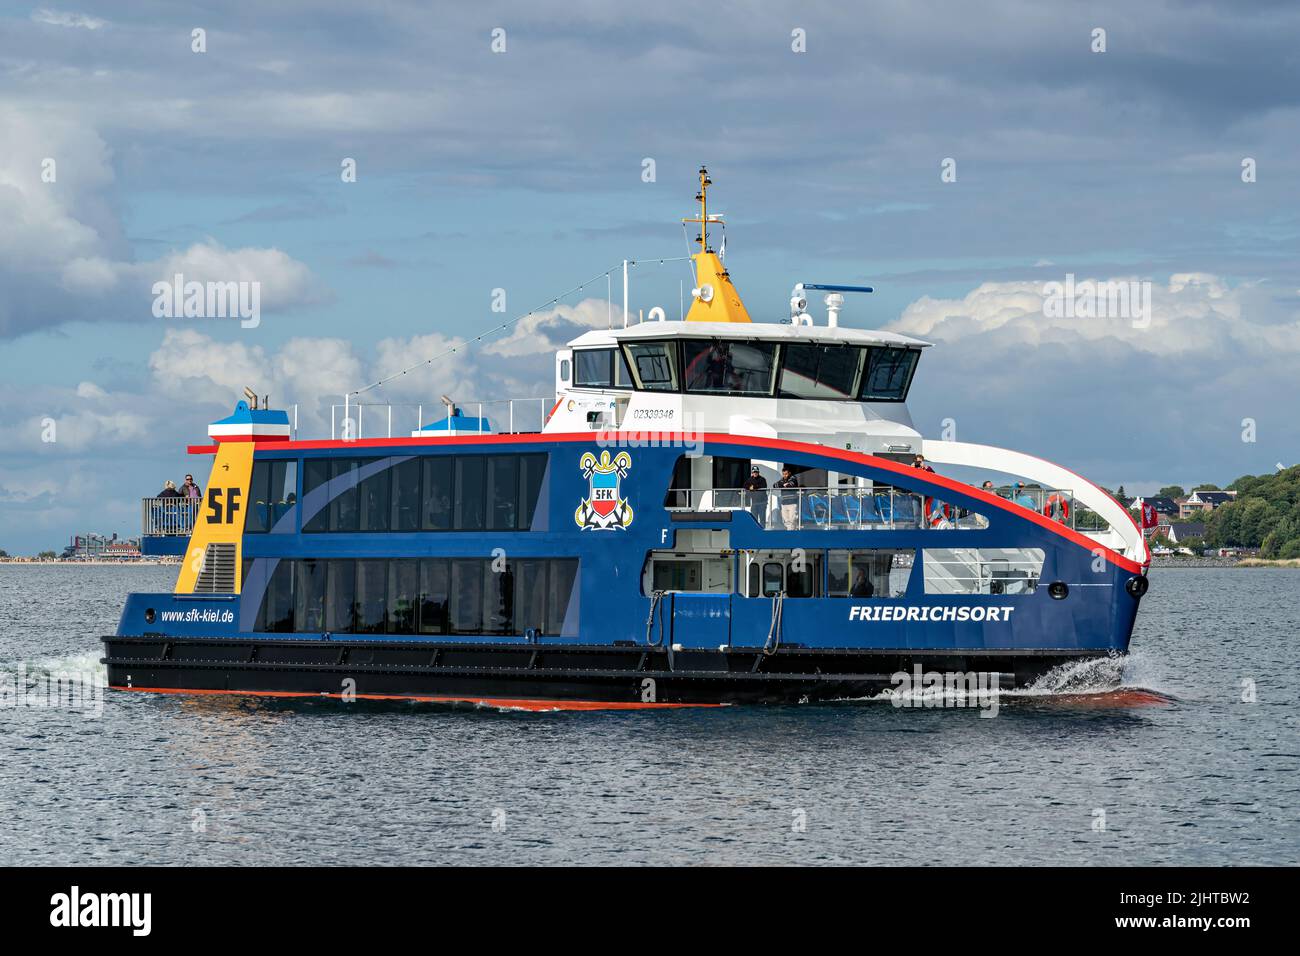 SFK passenger ship FRIEDRICHSORT in the Kiel Fjord Stock Photo